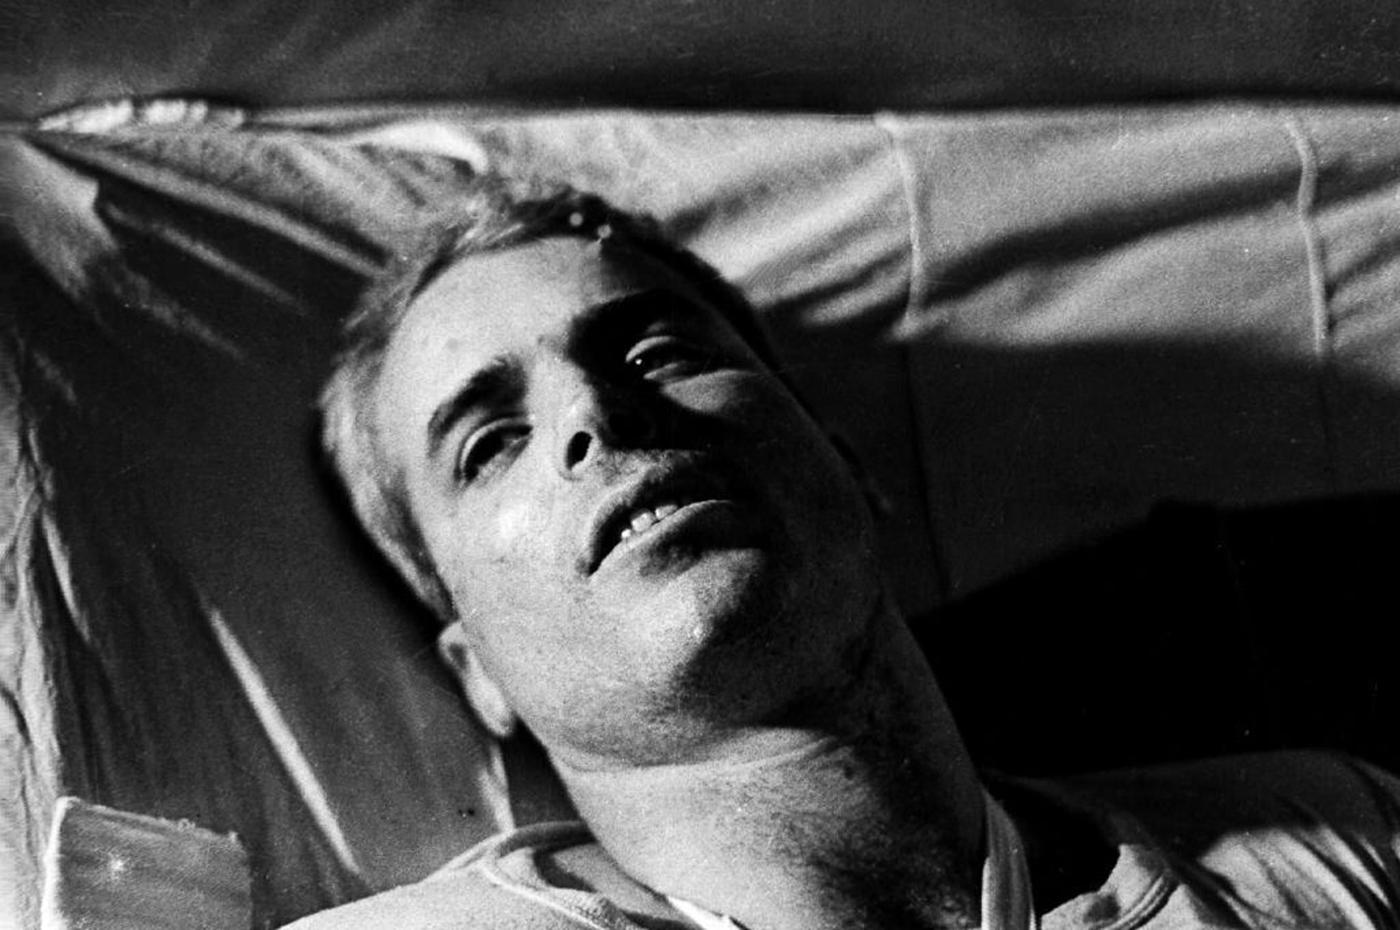 John McCain lying on a bed in Hanoi hospital